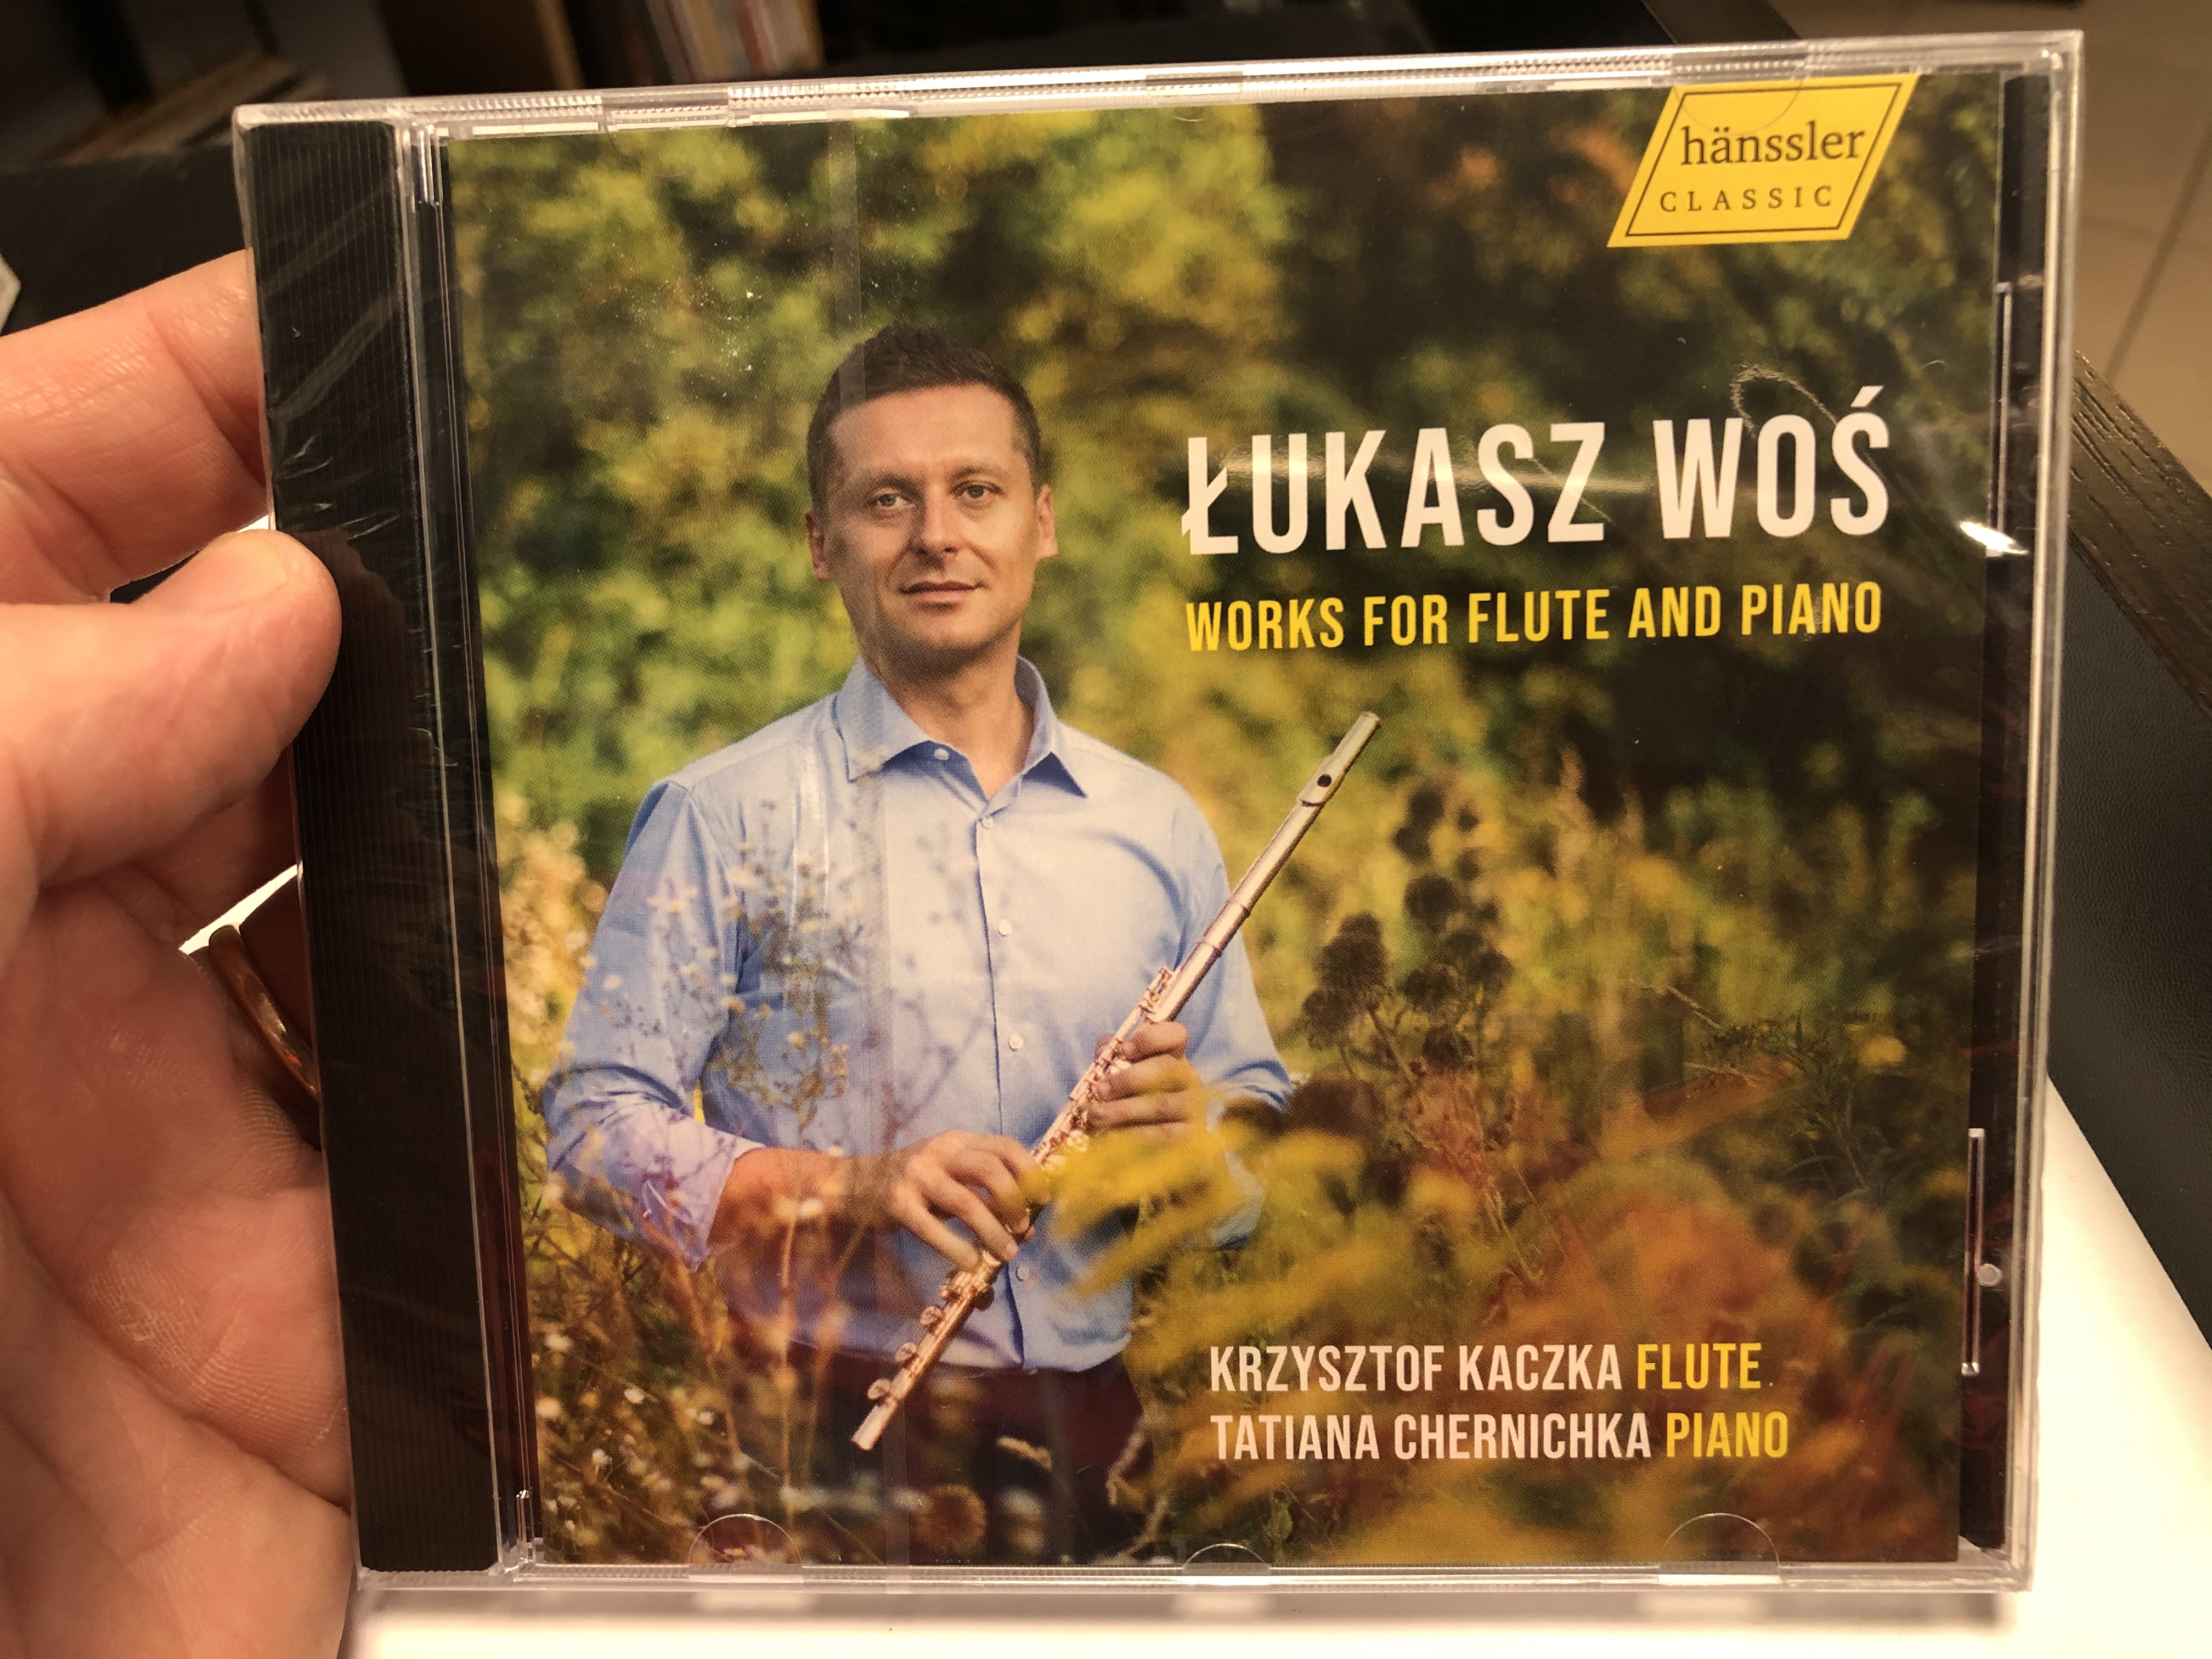 lukasz-wos-works-for-flute-and-piano-krzystof-kaczka-flute-tatiana-chernichka-piano-hanssler-classic-audio-cd-2019-hc20001-1-.jpg